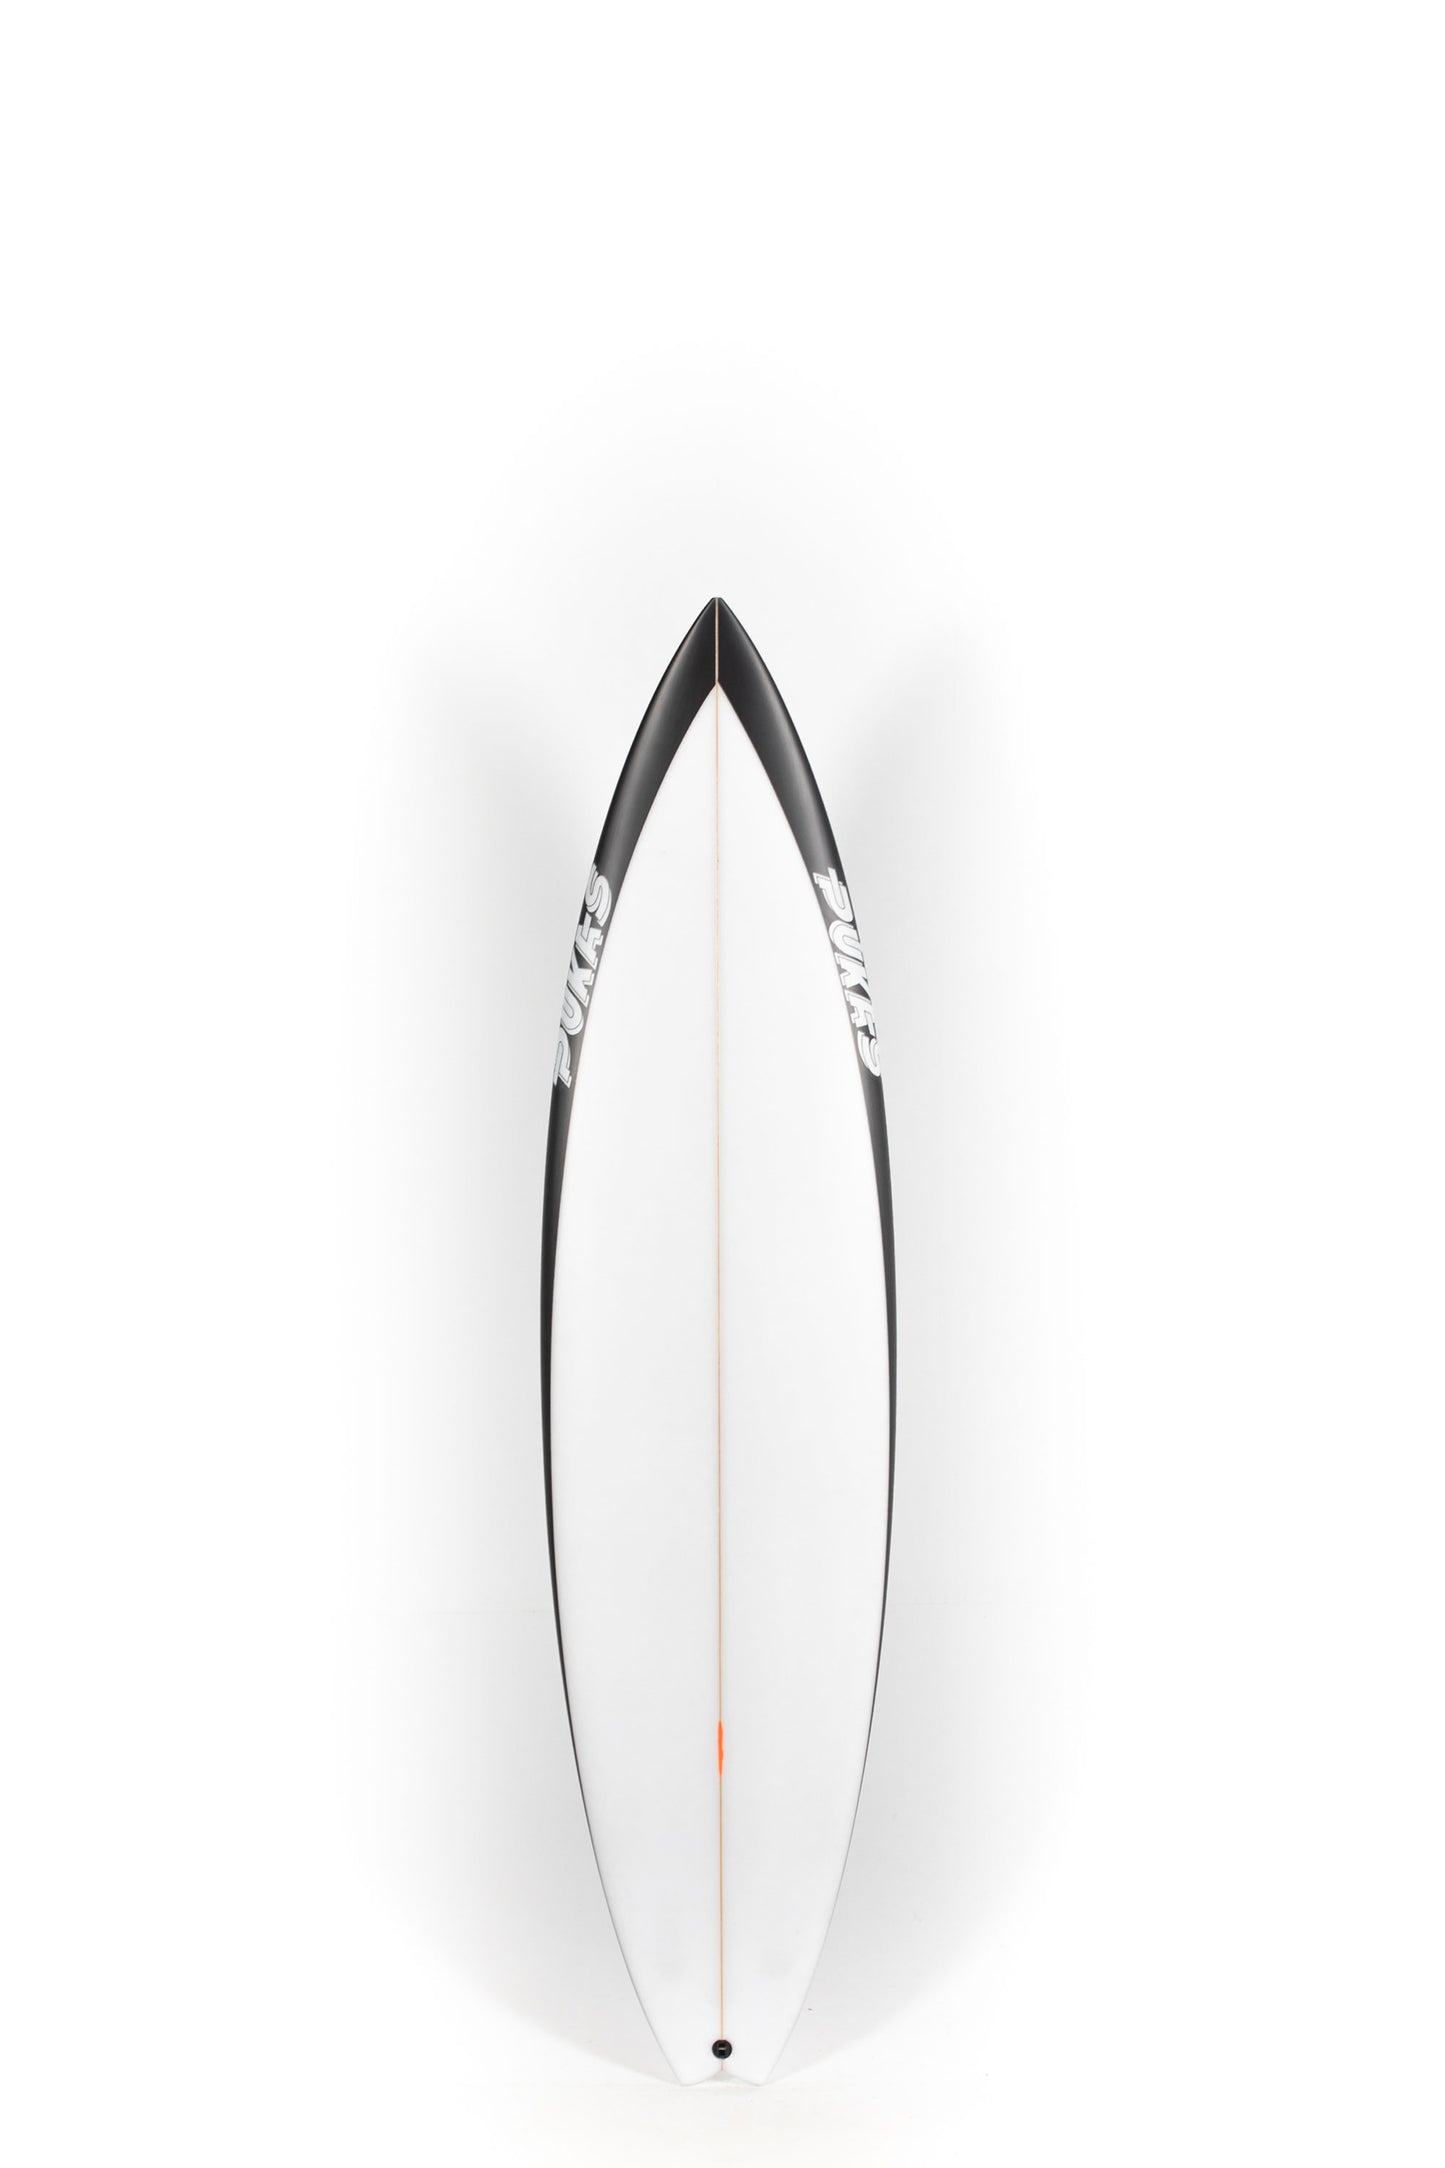 Pukas Surf shop - Pukas Surfboard - WATER LION ULTRA by Chris Christenson - 6’6” x 18,88 x 2,5 - 32,7L - PC00830